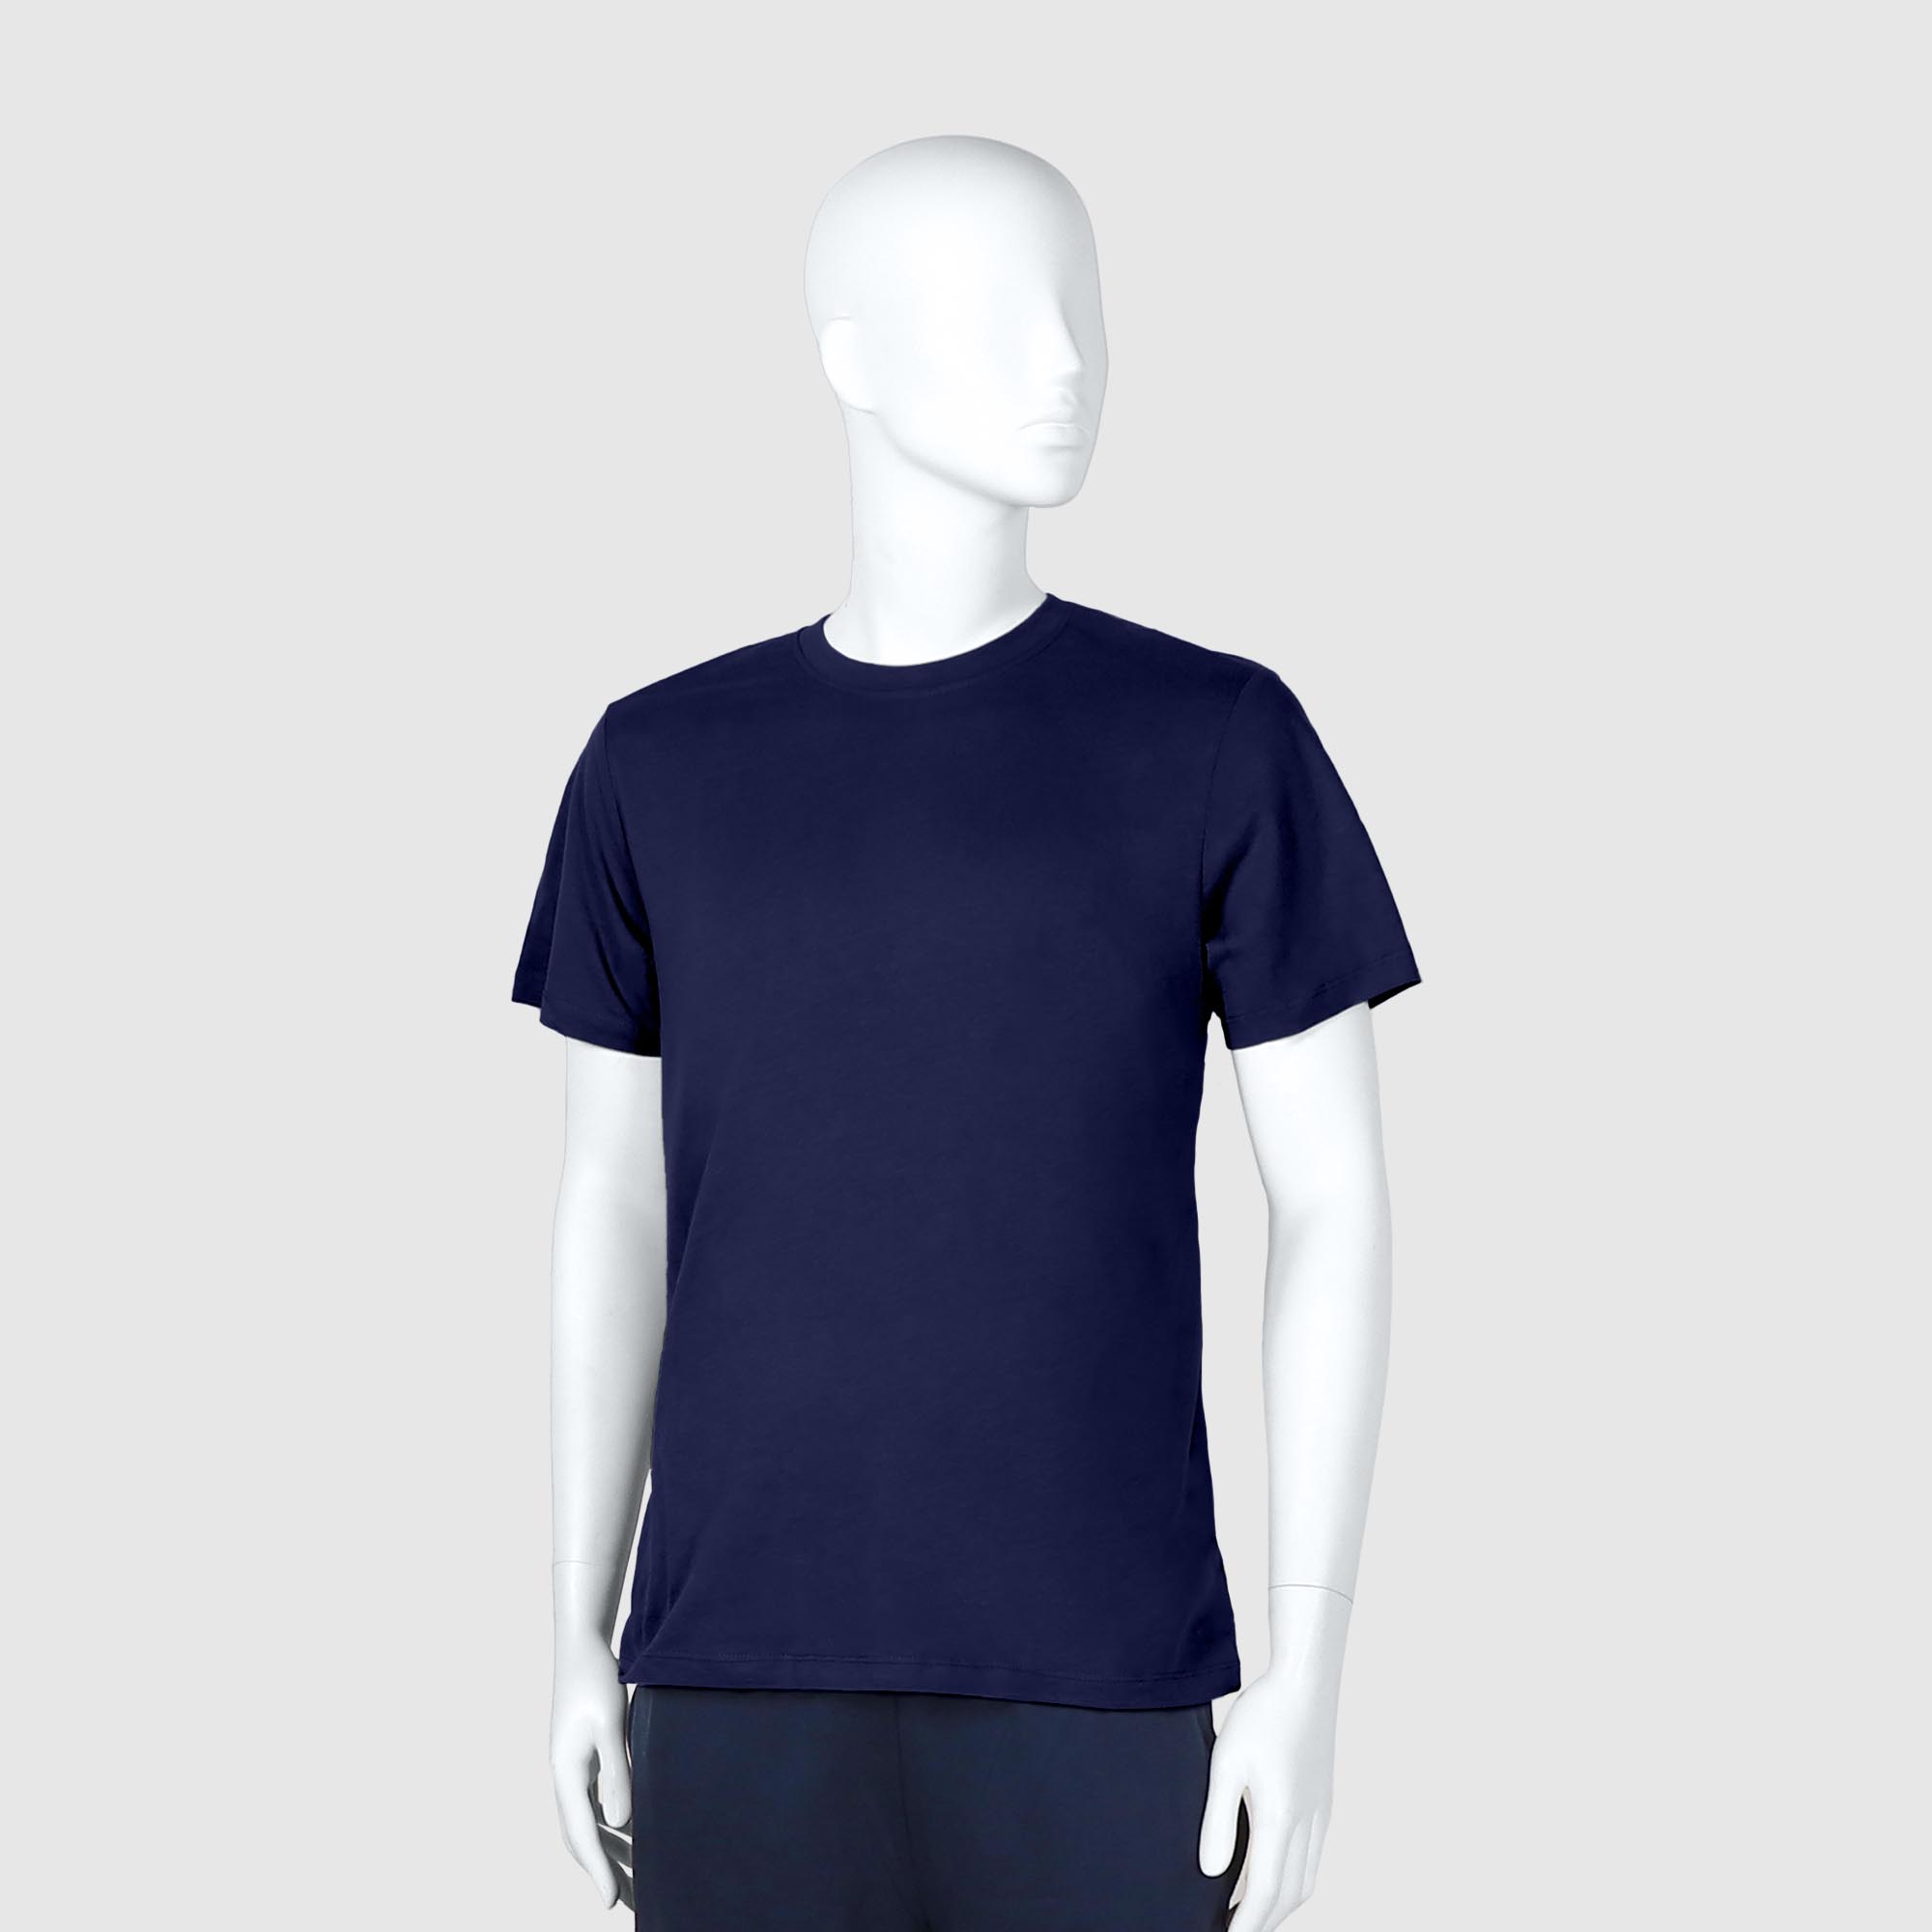 Мужская футболка Diva Teks синяя (DTD-05), цвет синий, размер 52-54